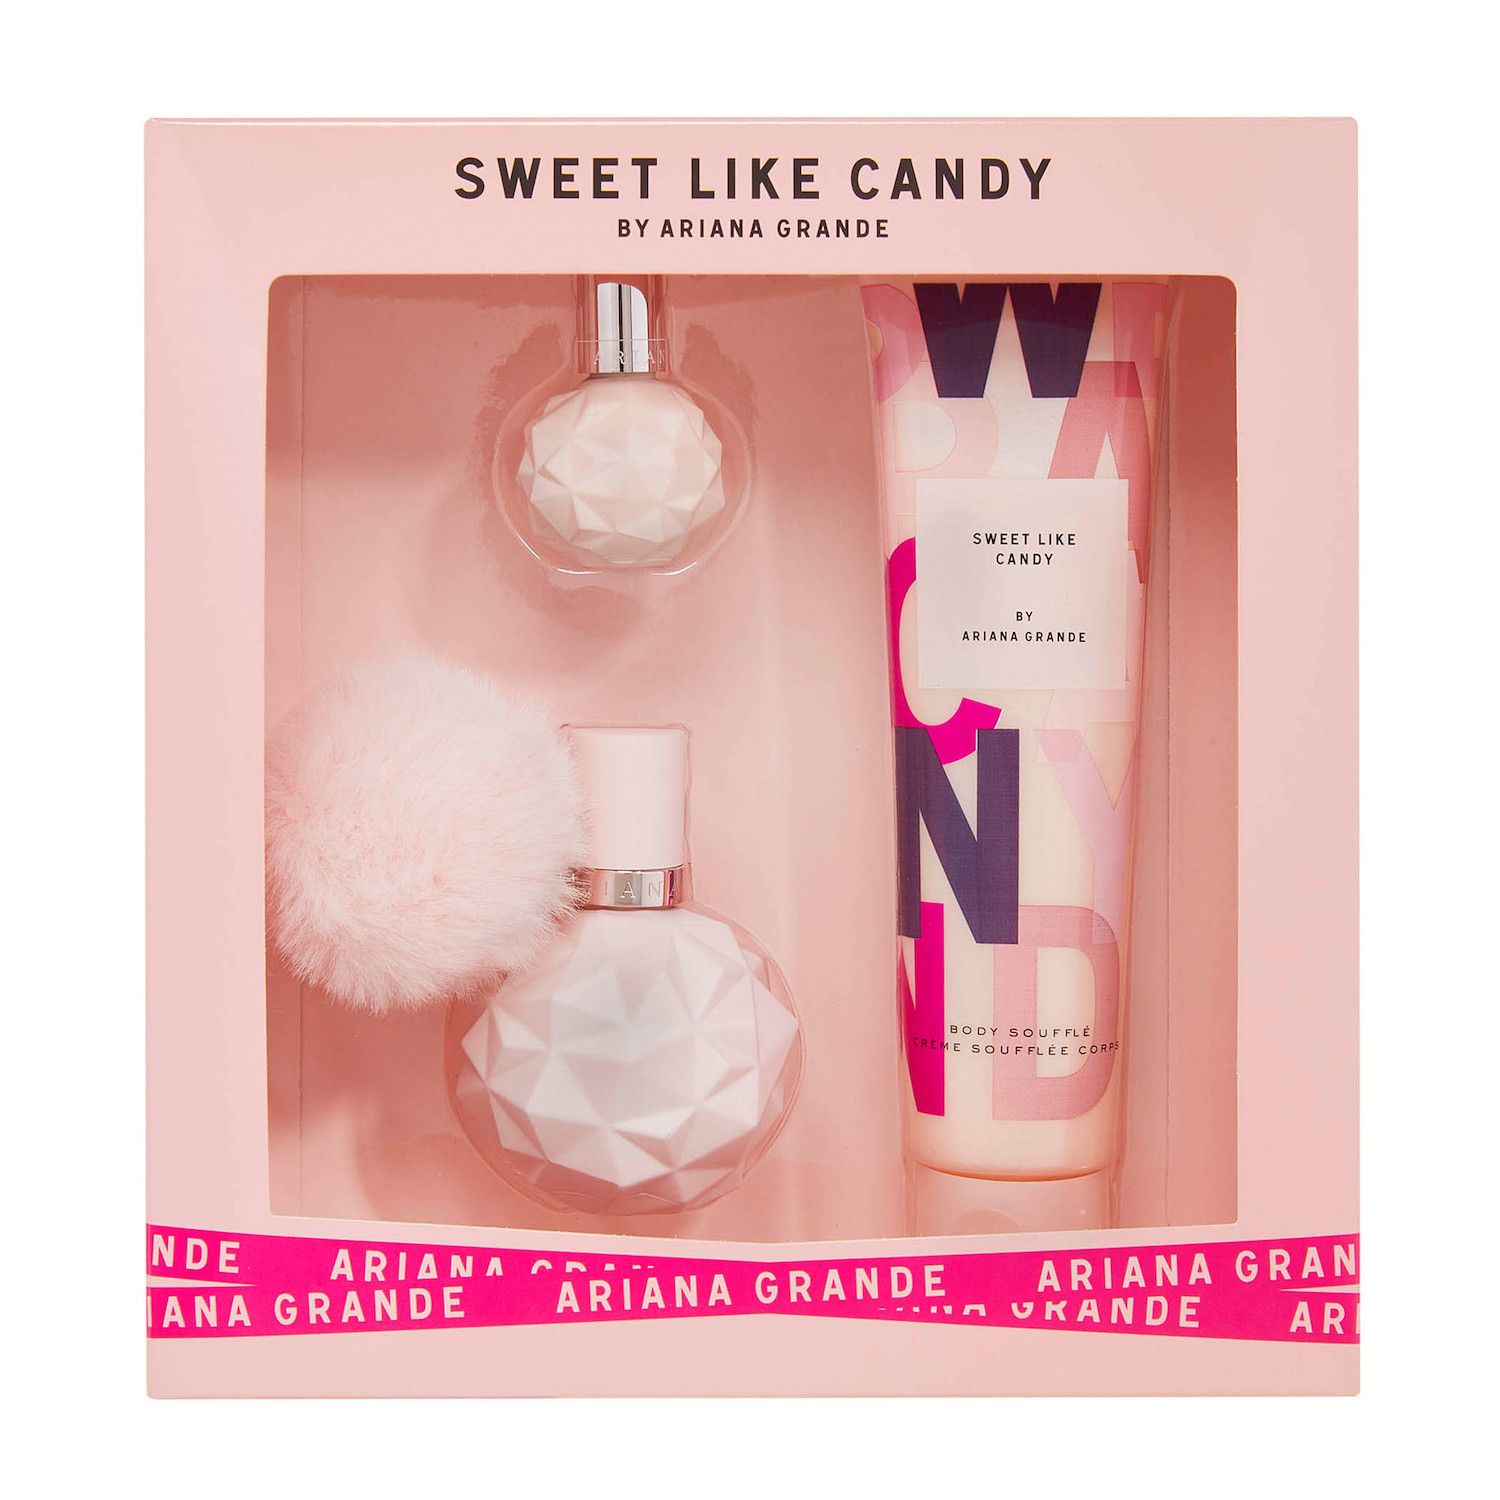 sweet like candy by ariana